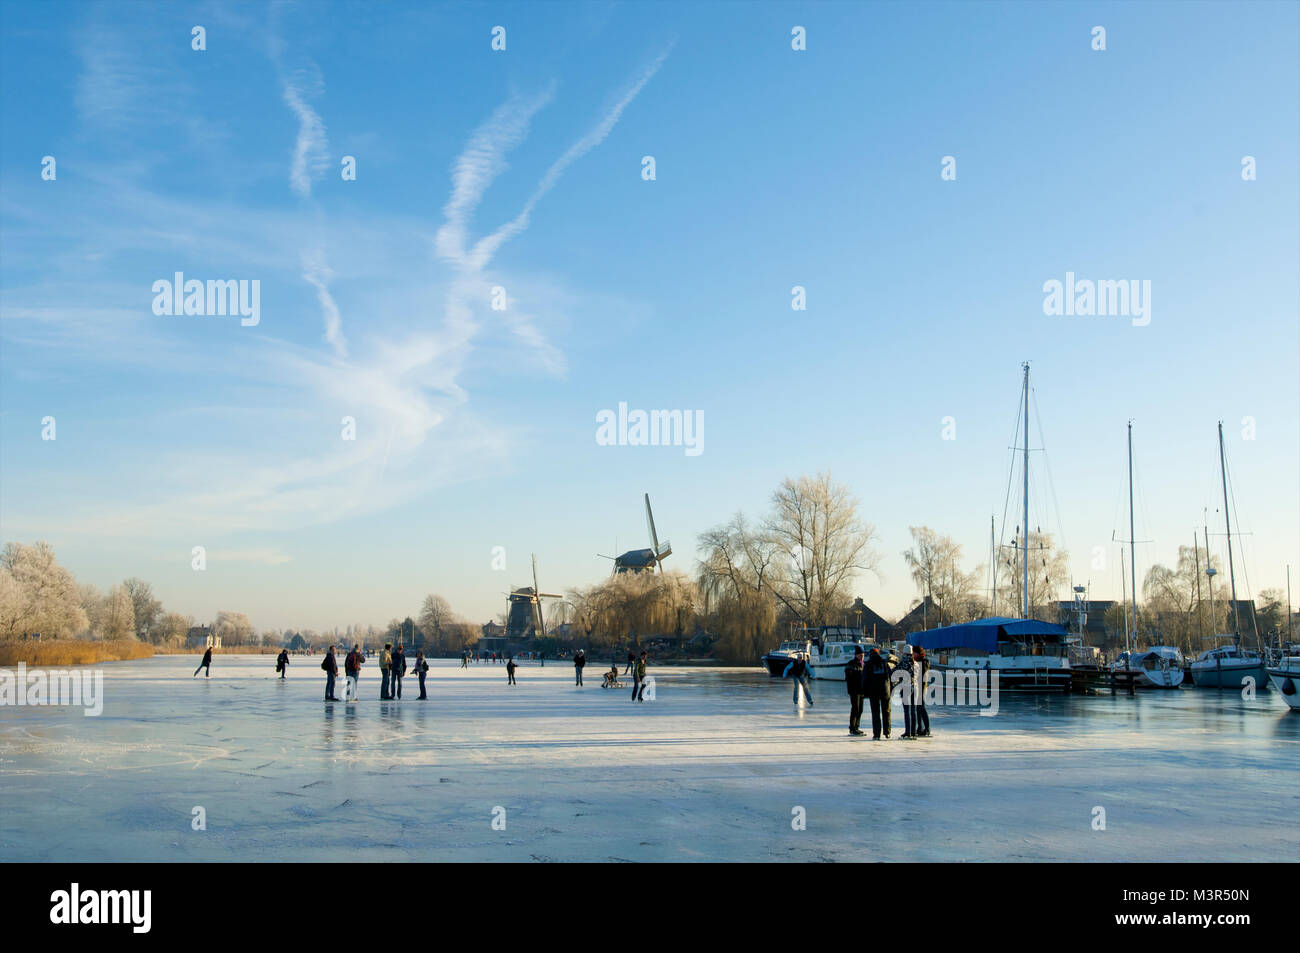 People standing on the frozen river de Vecht near Weesp, the Netherlands Stock Photo